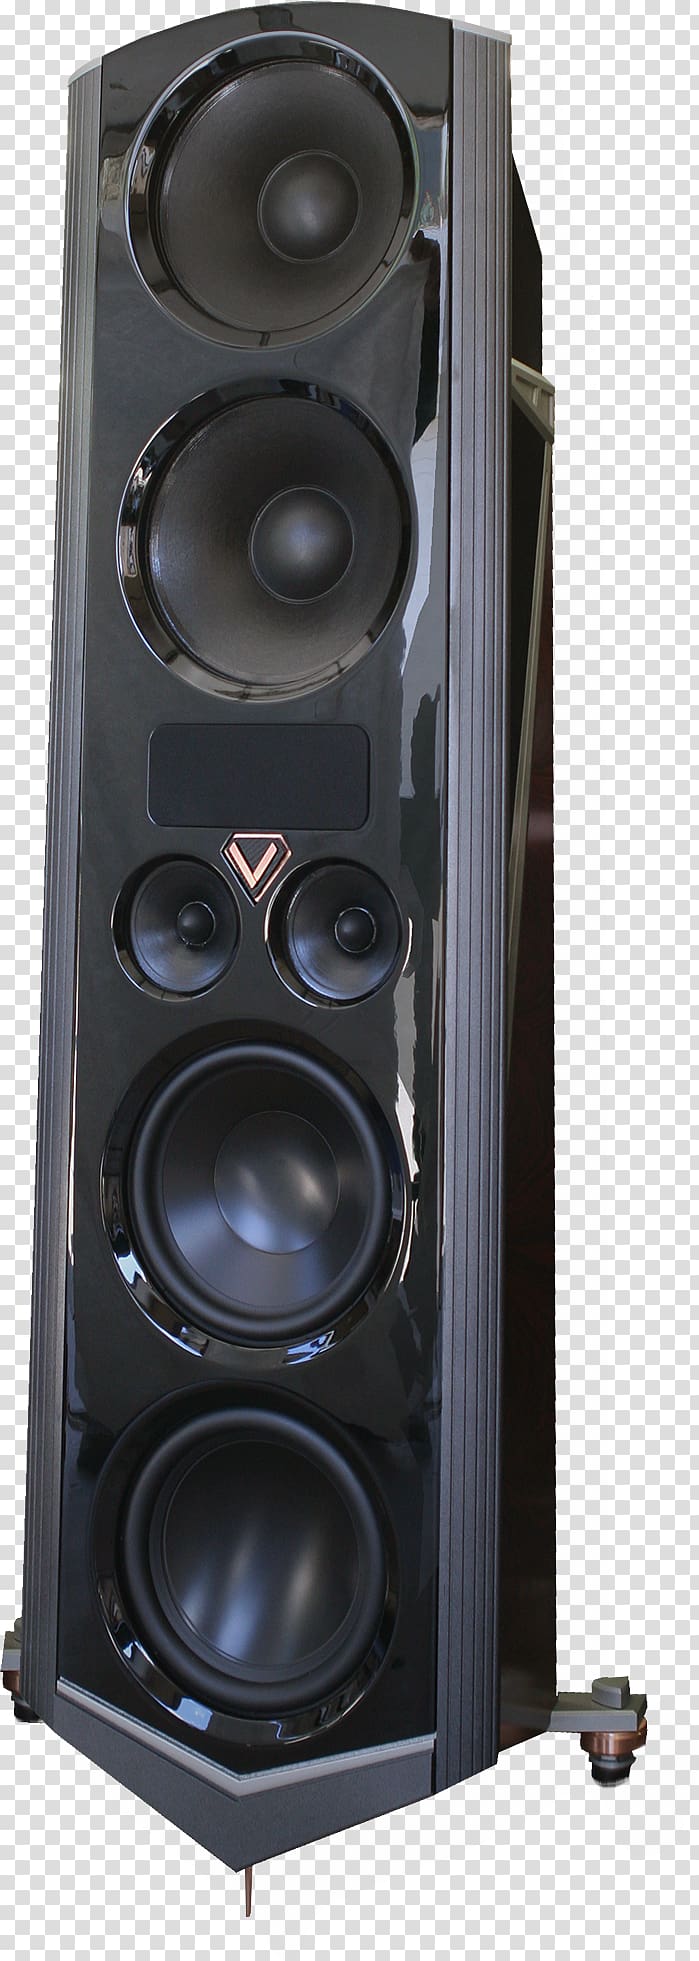 Sound Loudspeaker High-end audio High fidelity, legacy loudspeakers transparent background PNG clipart